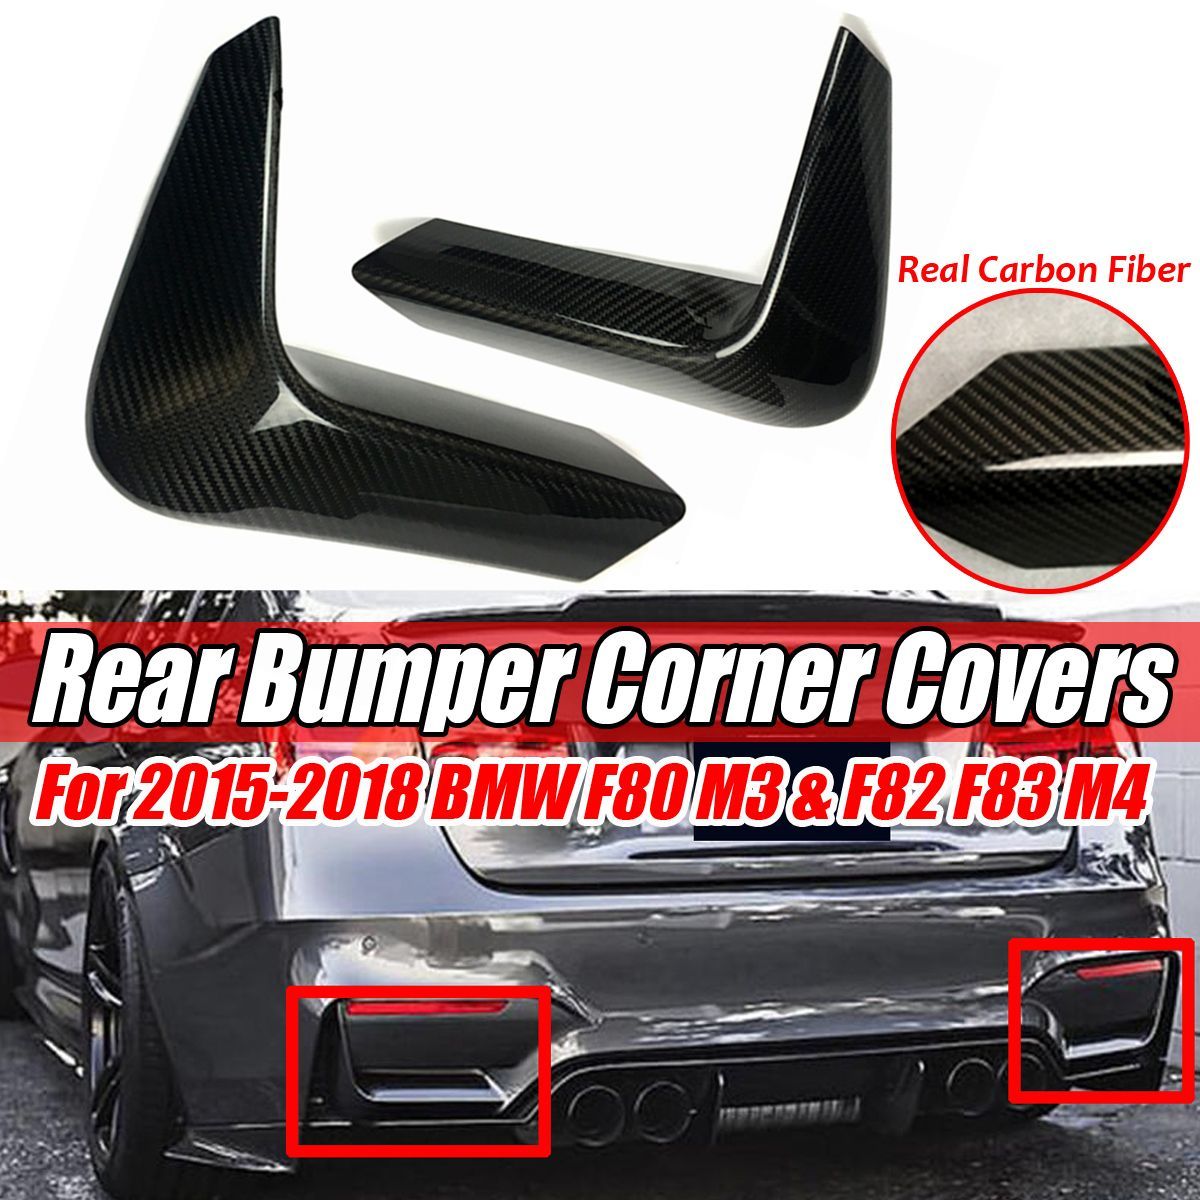 Carbon-Fiber-Rear-Bumper-Corner-Valance-Cover-For-BMW-F80-M3-F82-F83-M4-2015-2018-1633103